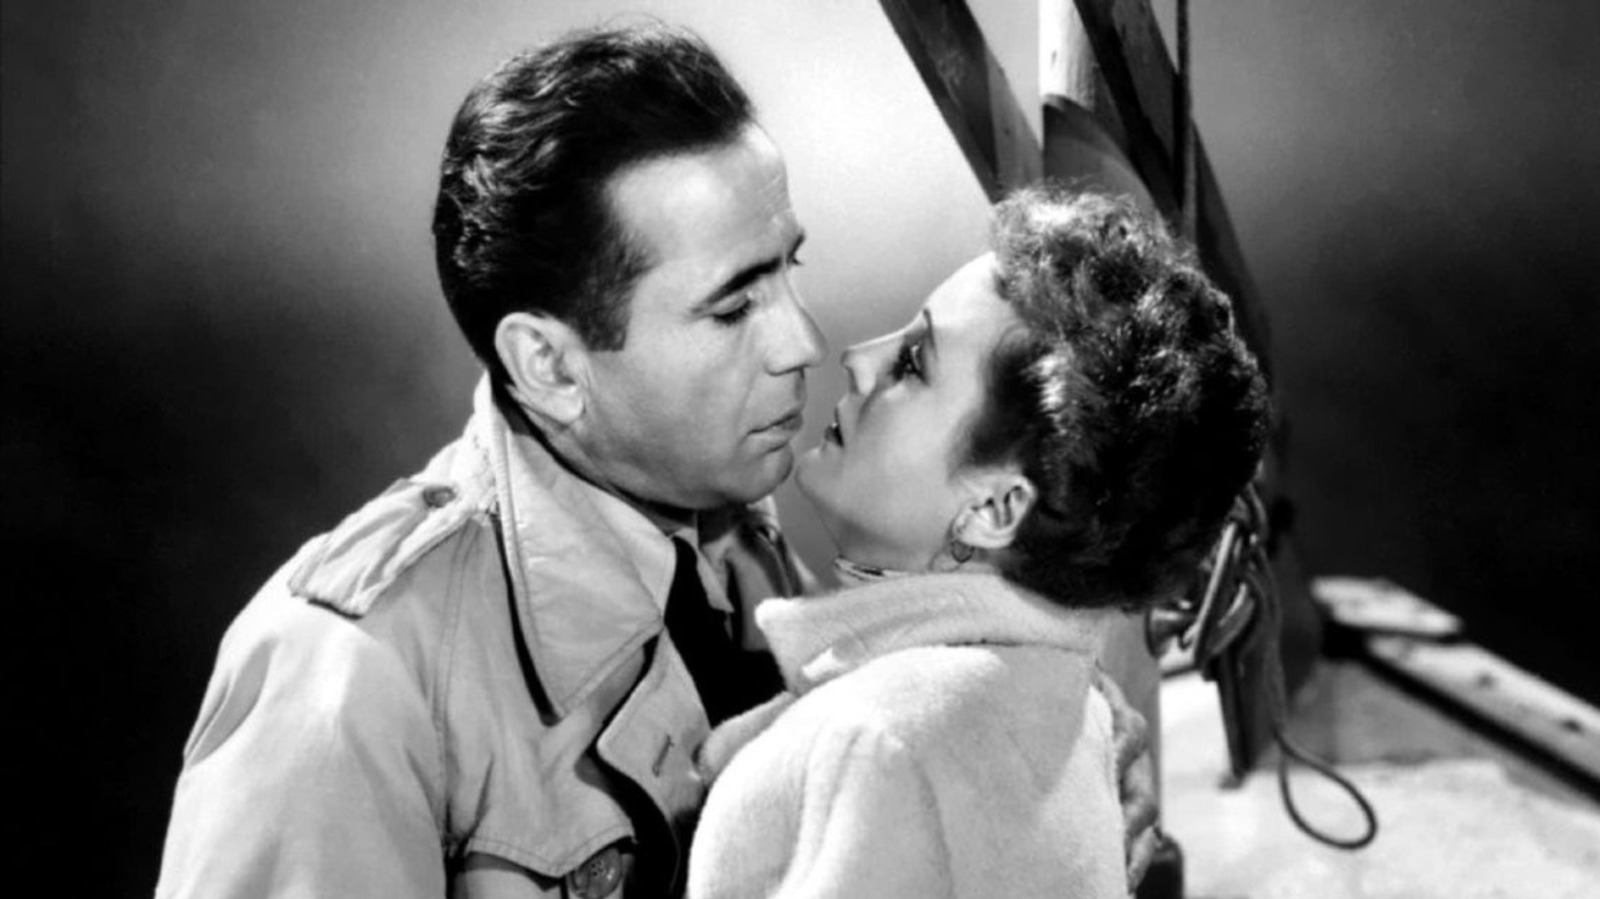 Filming love scenes in Hollywood has never been Humphrey Bogart's forte